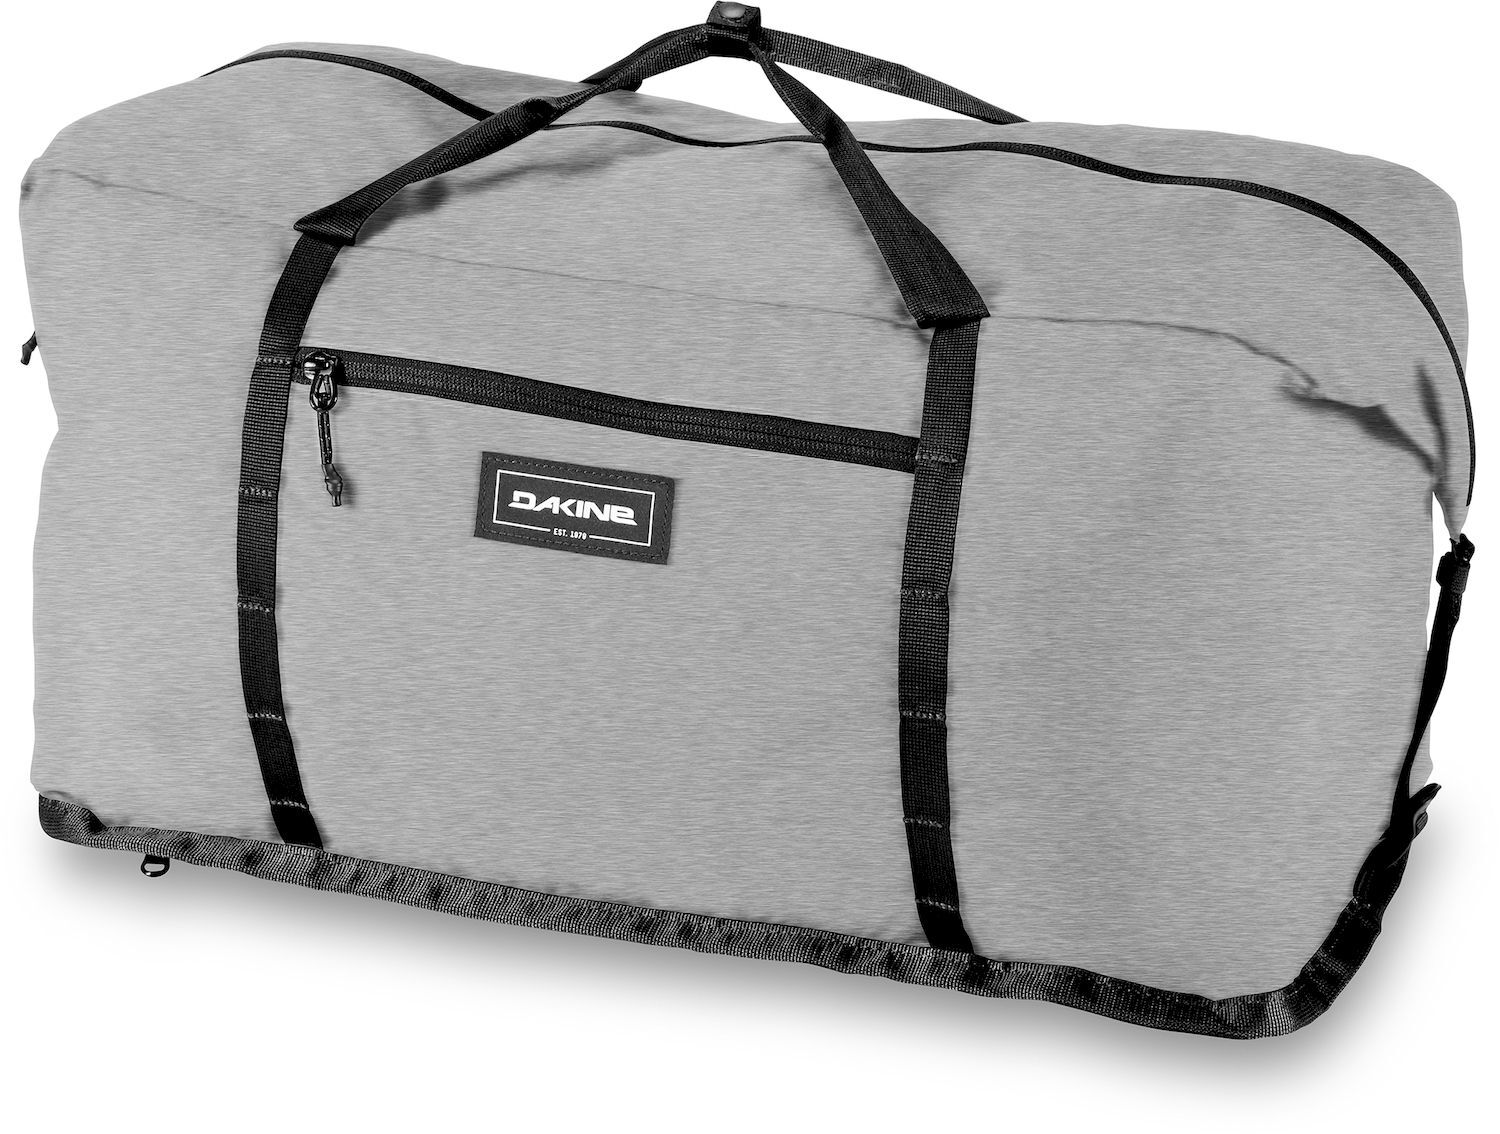 Dakine Packable Duffle 40L - Travel backpack